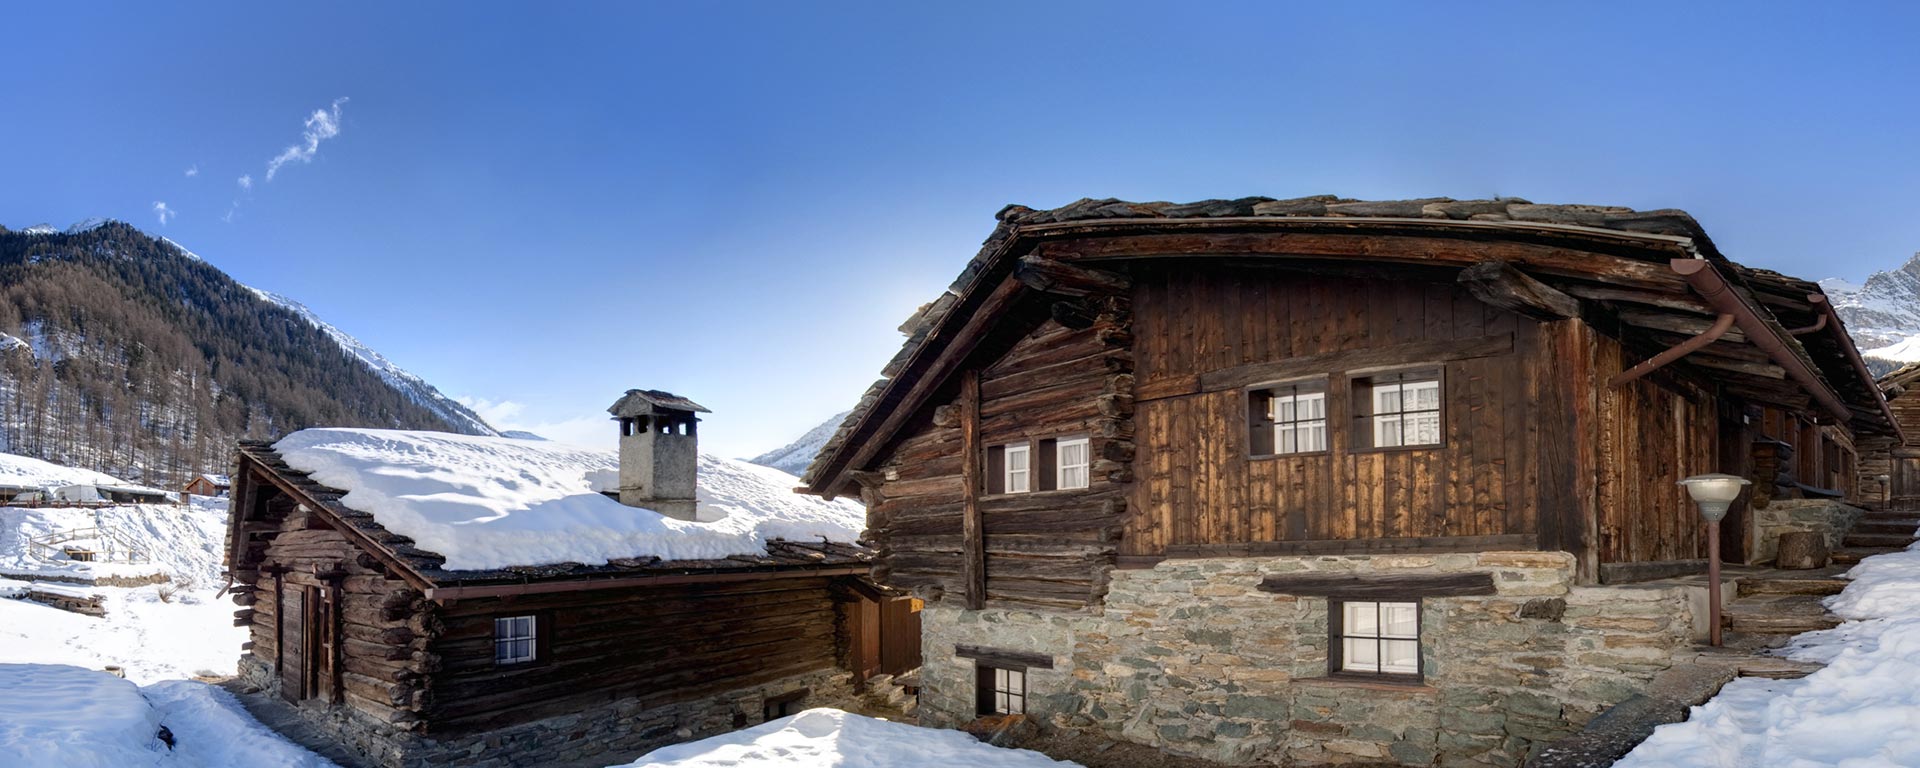 Berghütte in schneebedeckter Landschaft bei St. Vigil in Enneberg